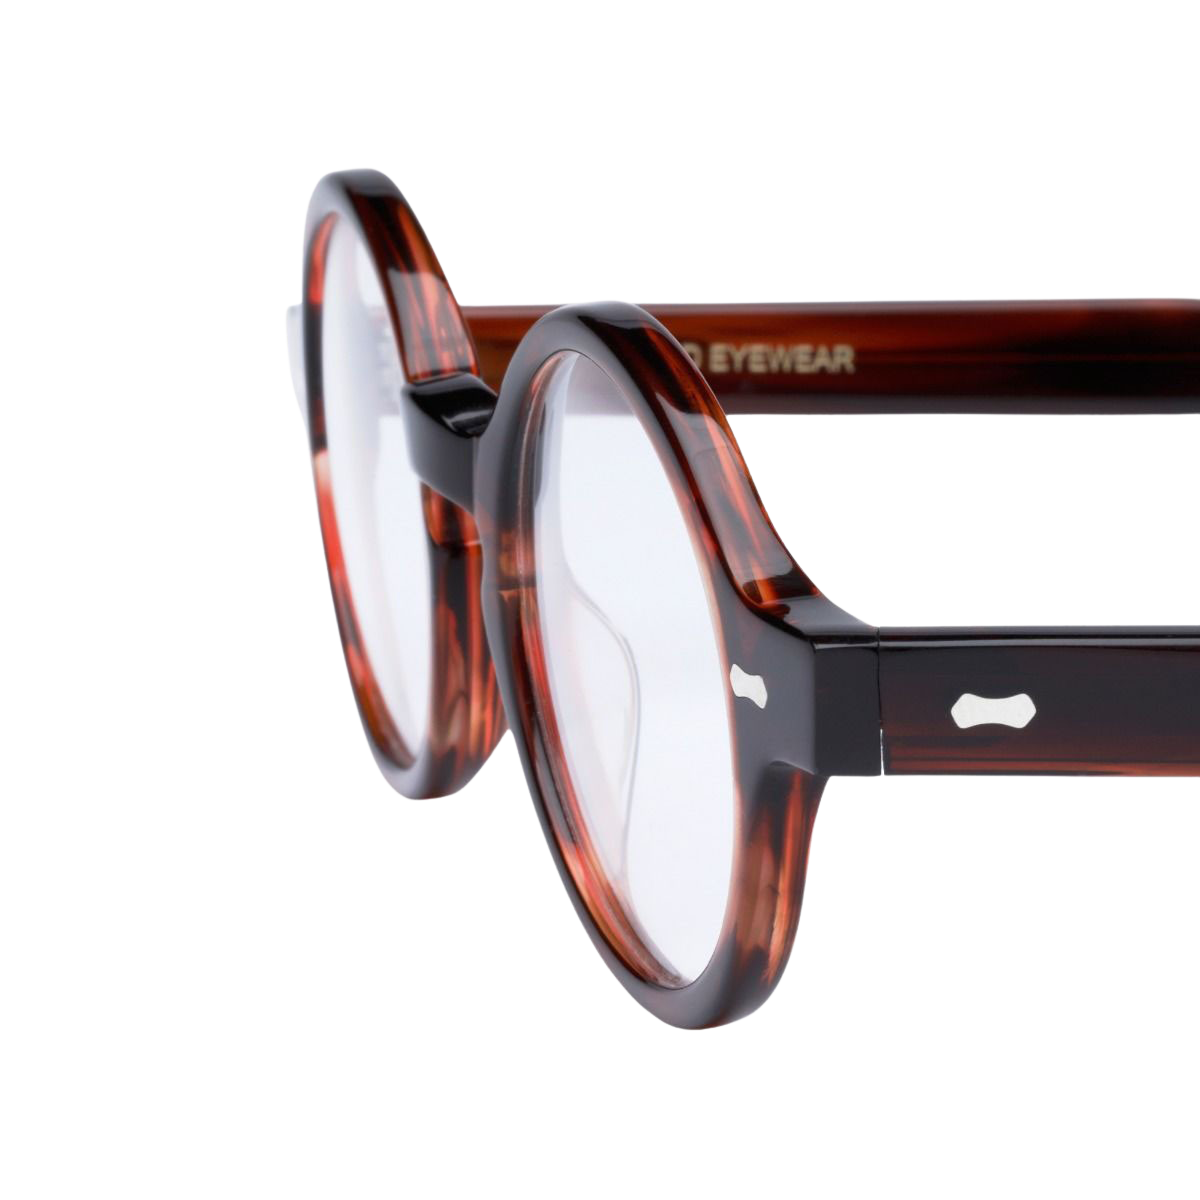 The Bespoke Dudes Eyewear Oxford Havana Optical Glasses 46mm Side